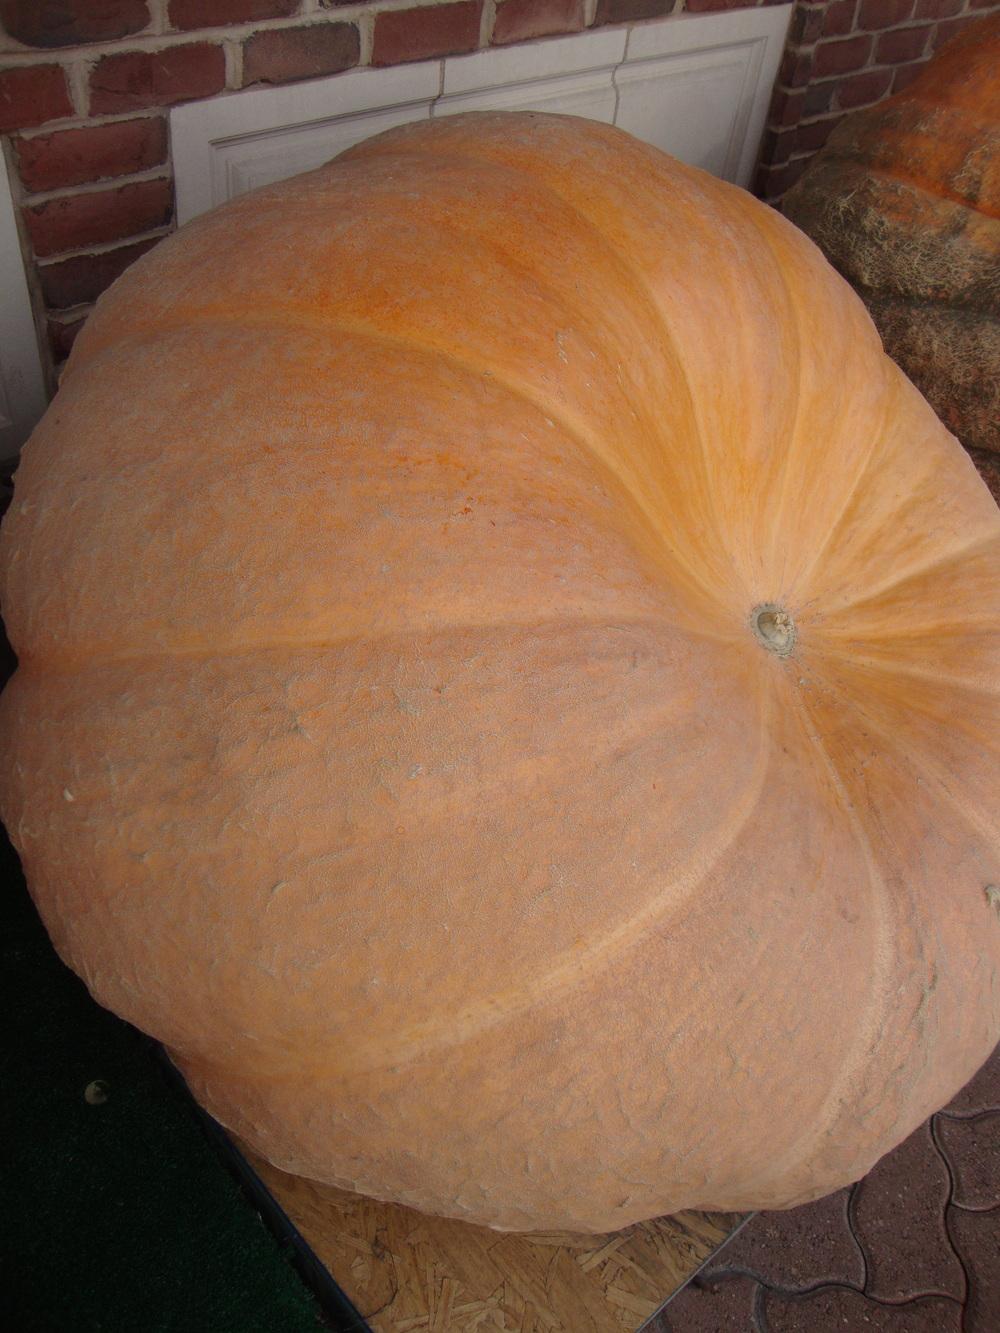 Photo of Pumpkin (Cucurbita maxima 'Atlantic Giant') uploaded by Paul2032